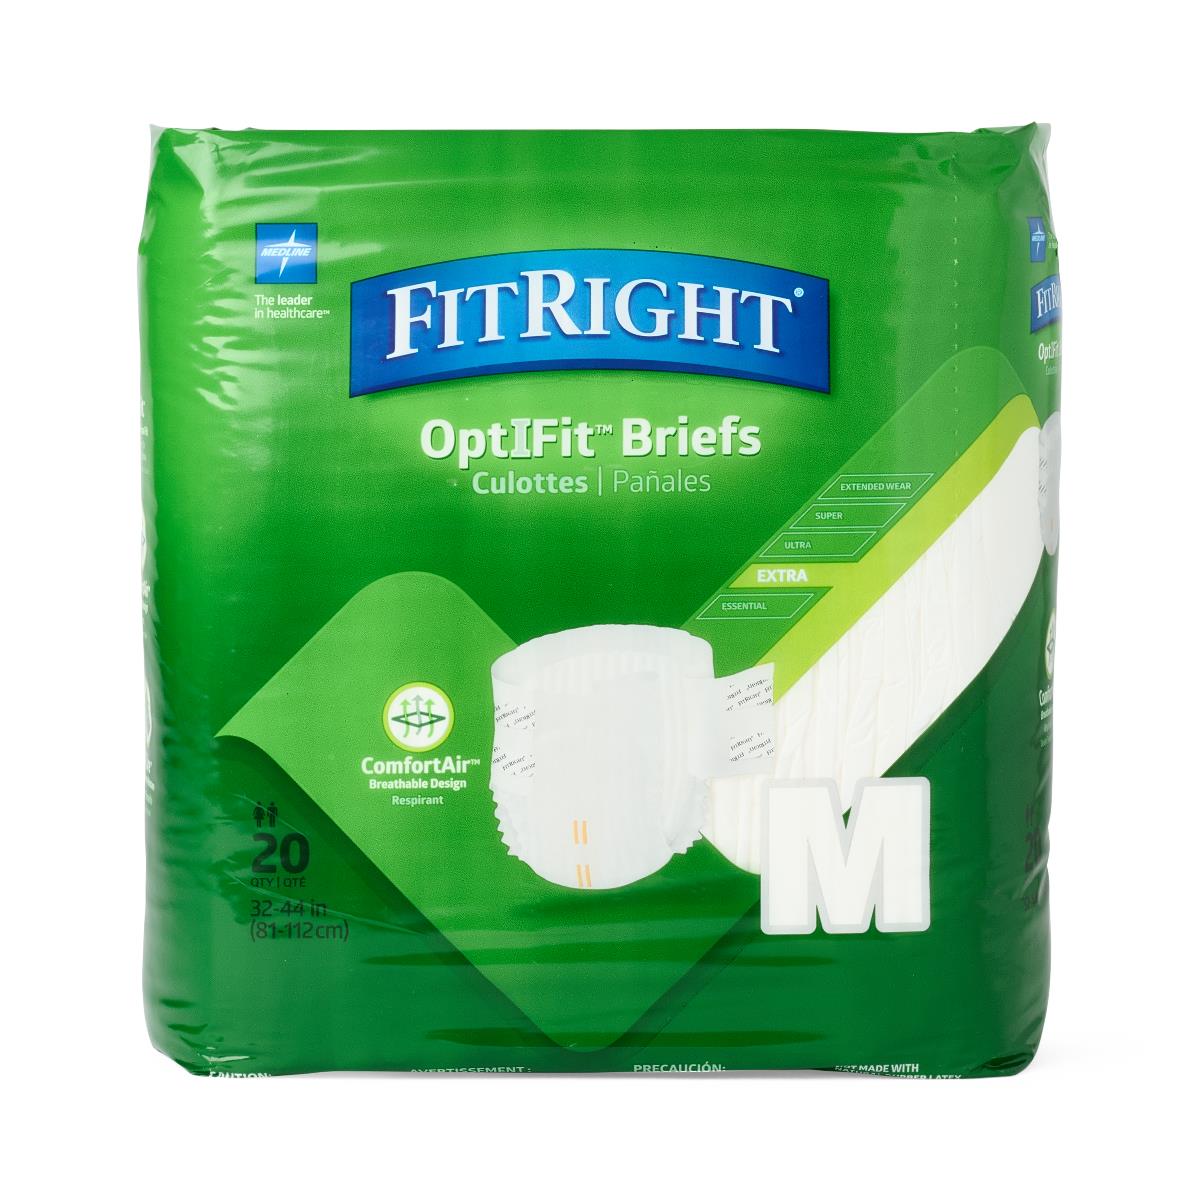 Medline FitRight OptiFit Extra Brief Size M 32"-44", 20/pk FITEXTRAMDZ